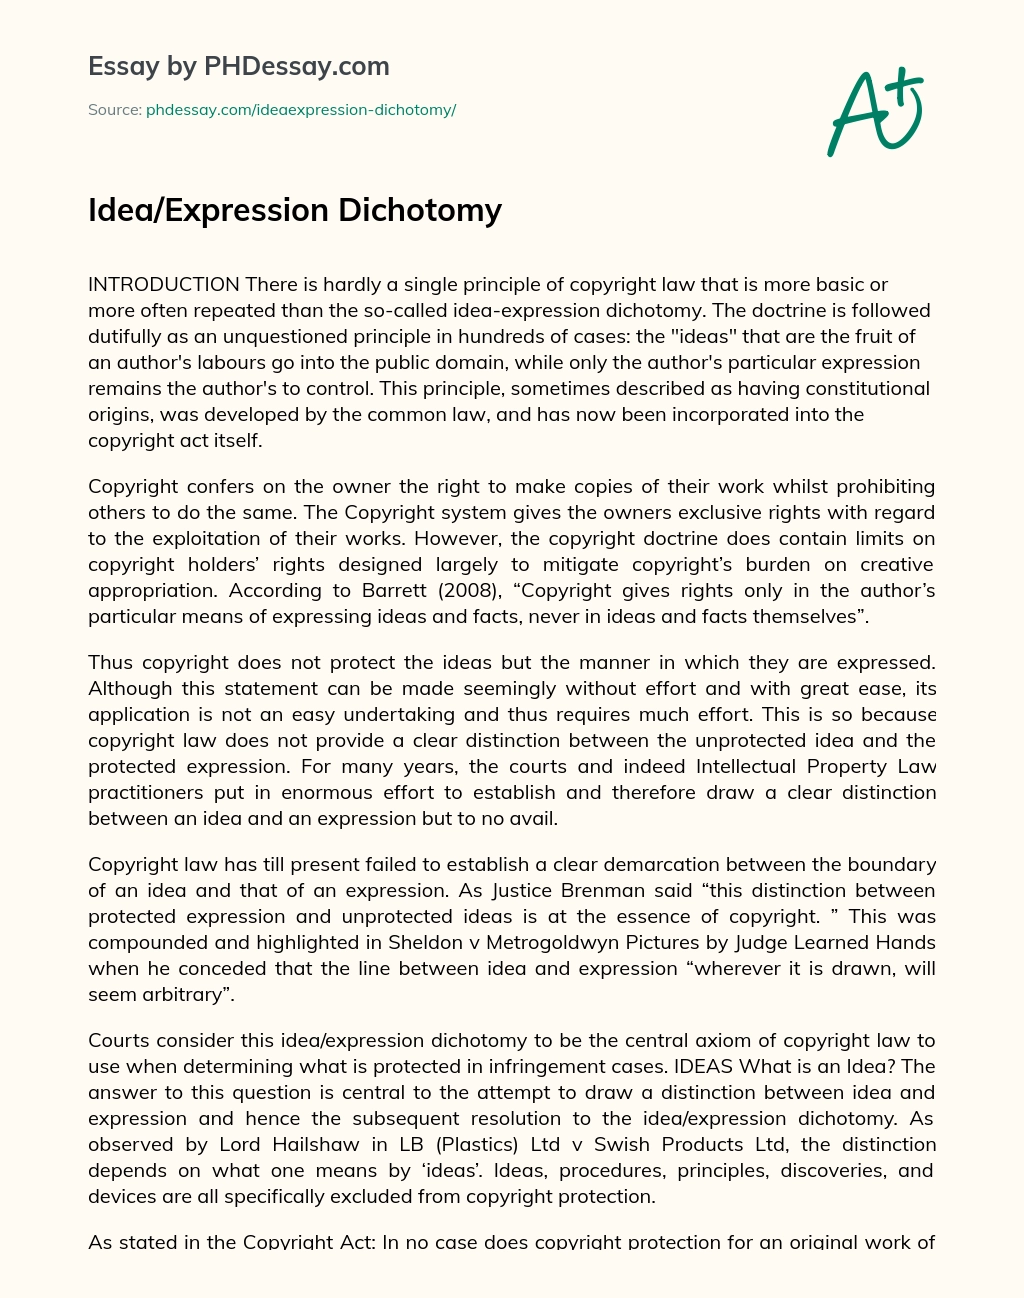 Idea/Expression Doctrine essay